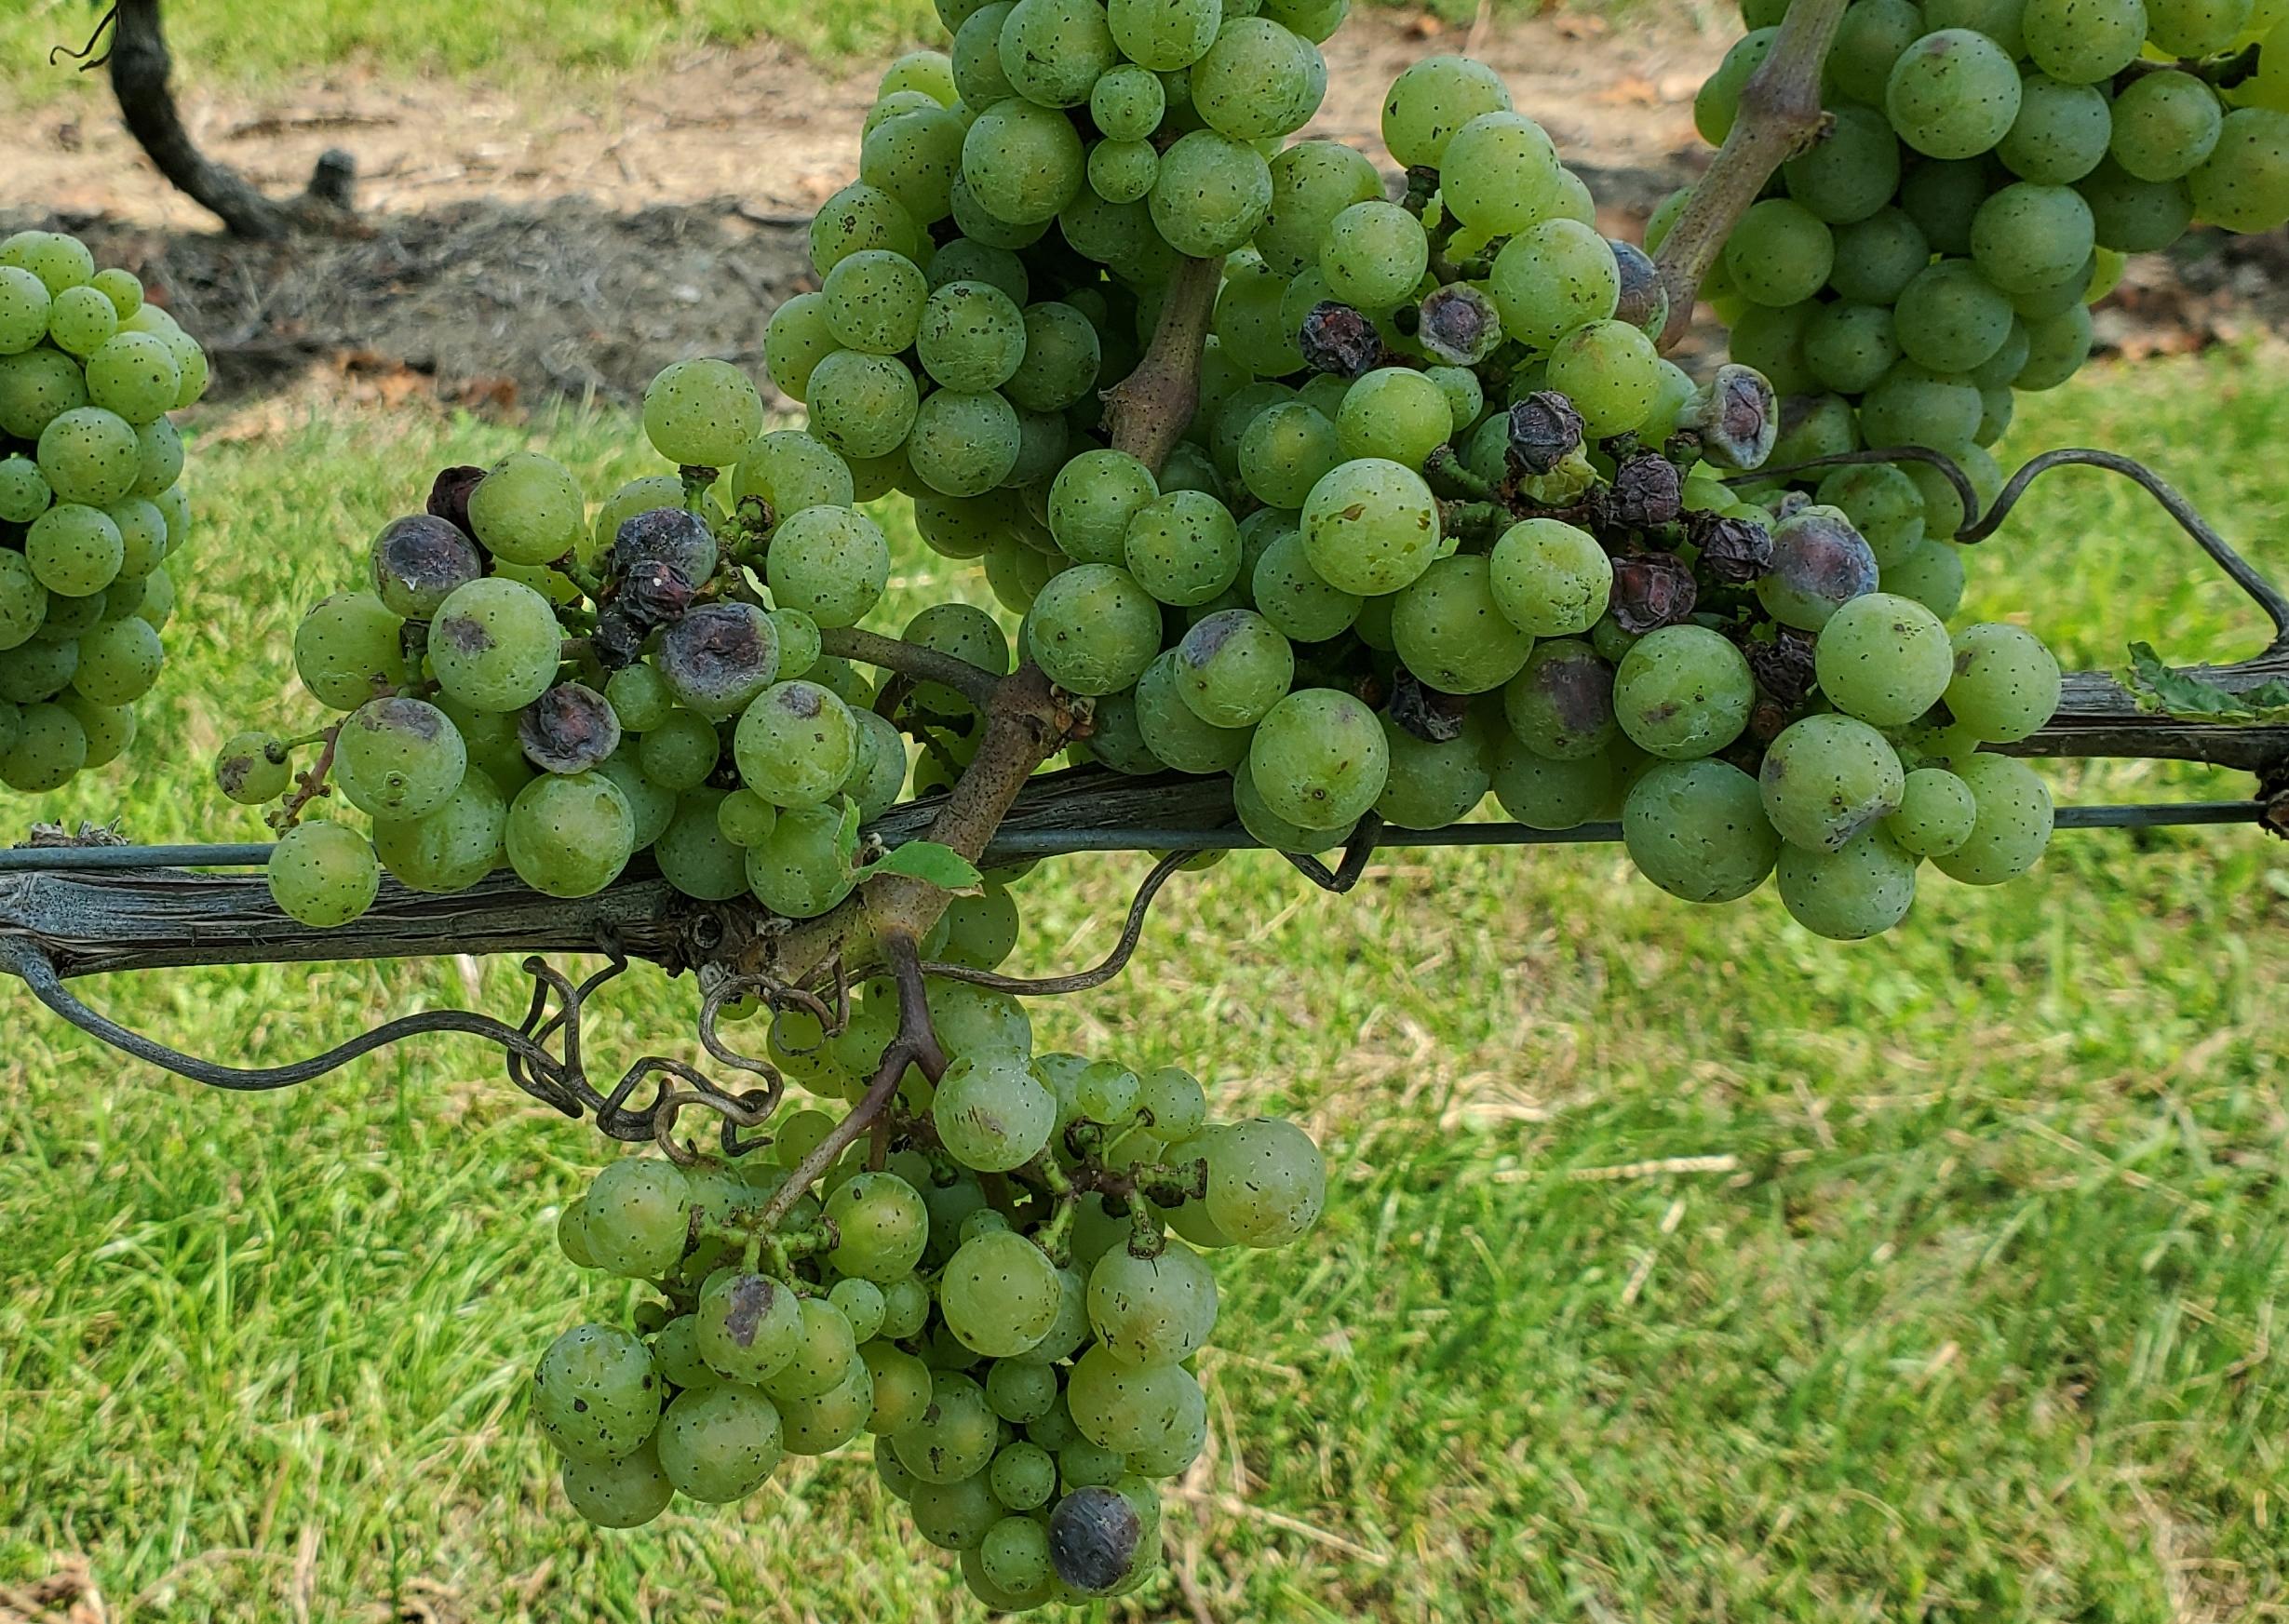 Sun damage symptoms to grape clusters.